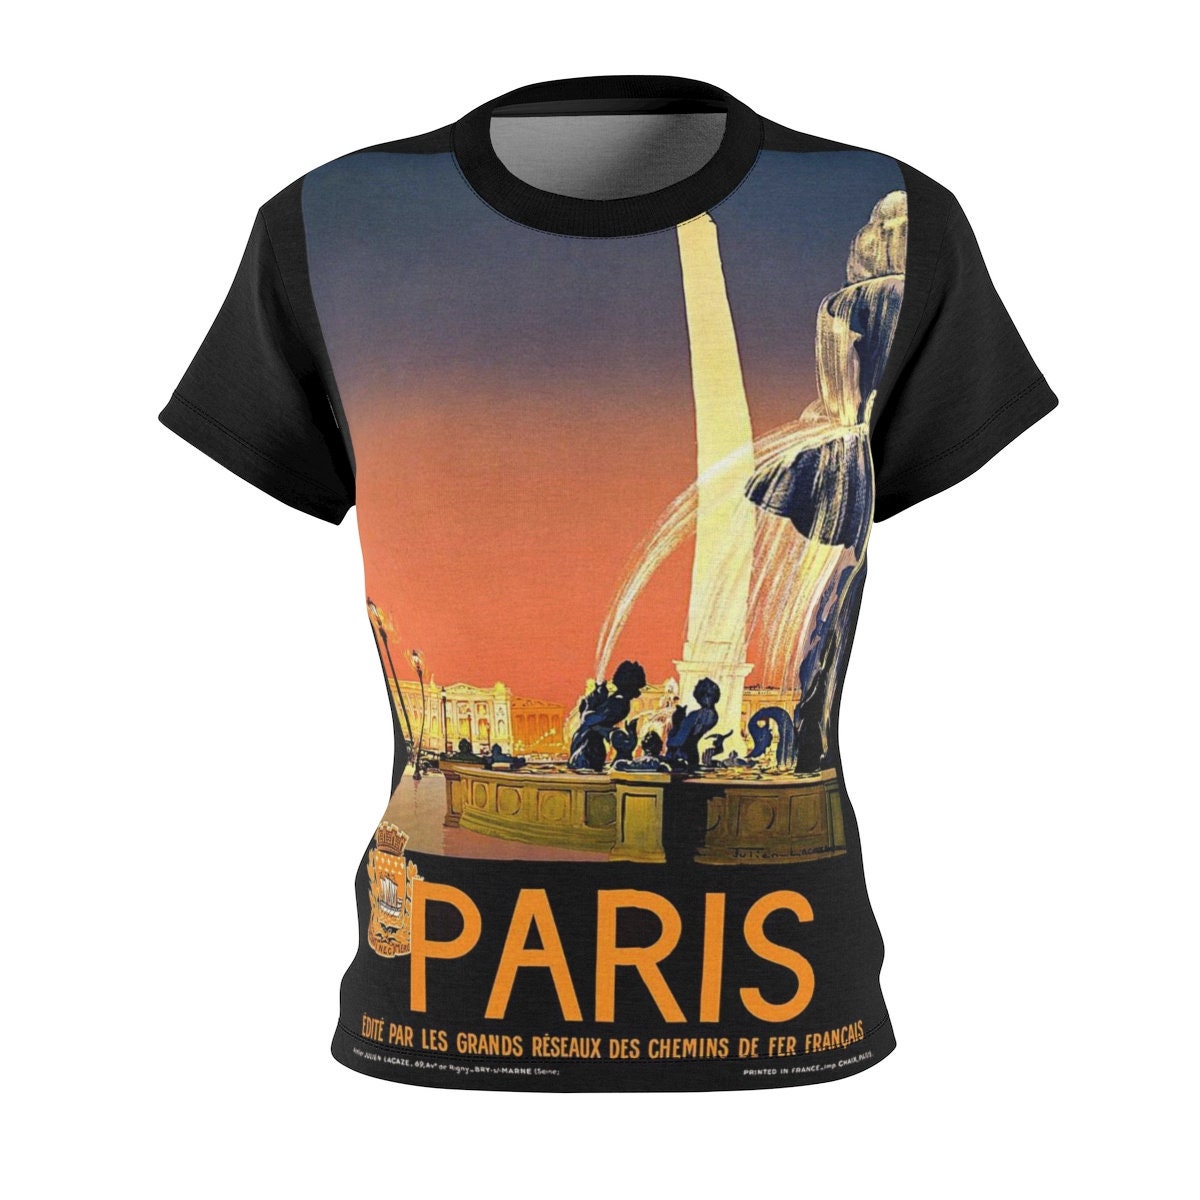 Gift for Her / Paris / Women's / Tee T-Shirt Shirt / Love / Peace / Valentine's gift / Travel / Vintage / Art / New / Sexy - Chloe Lambertin